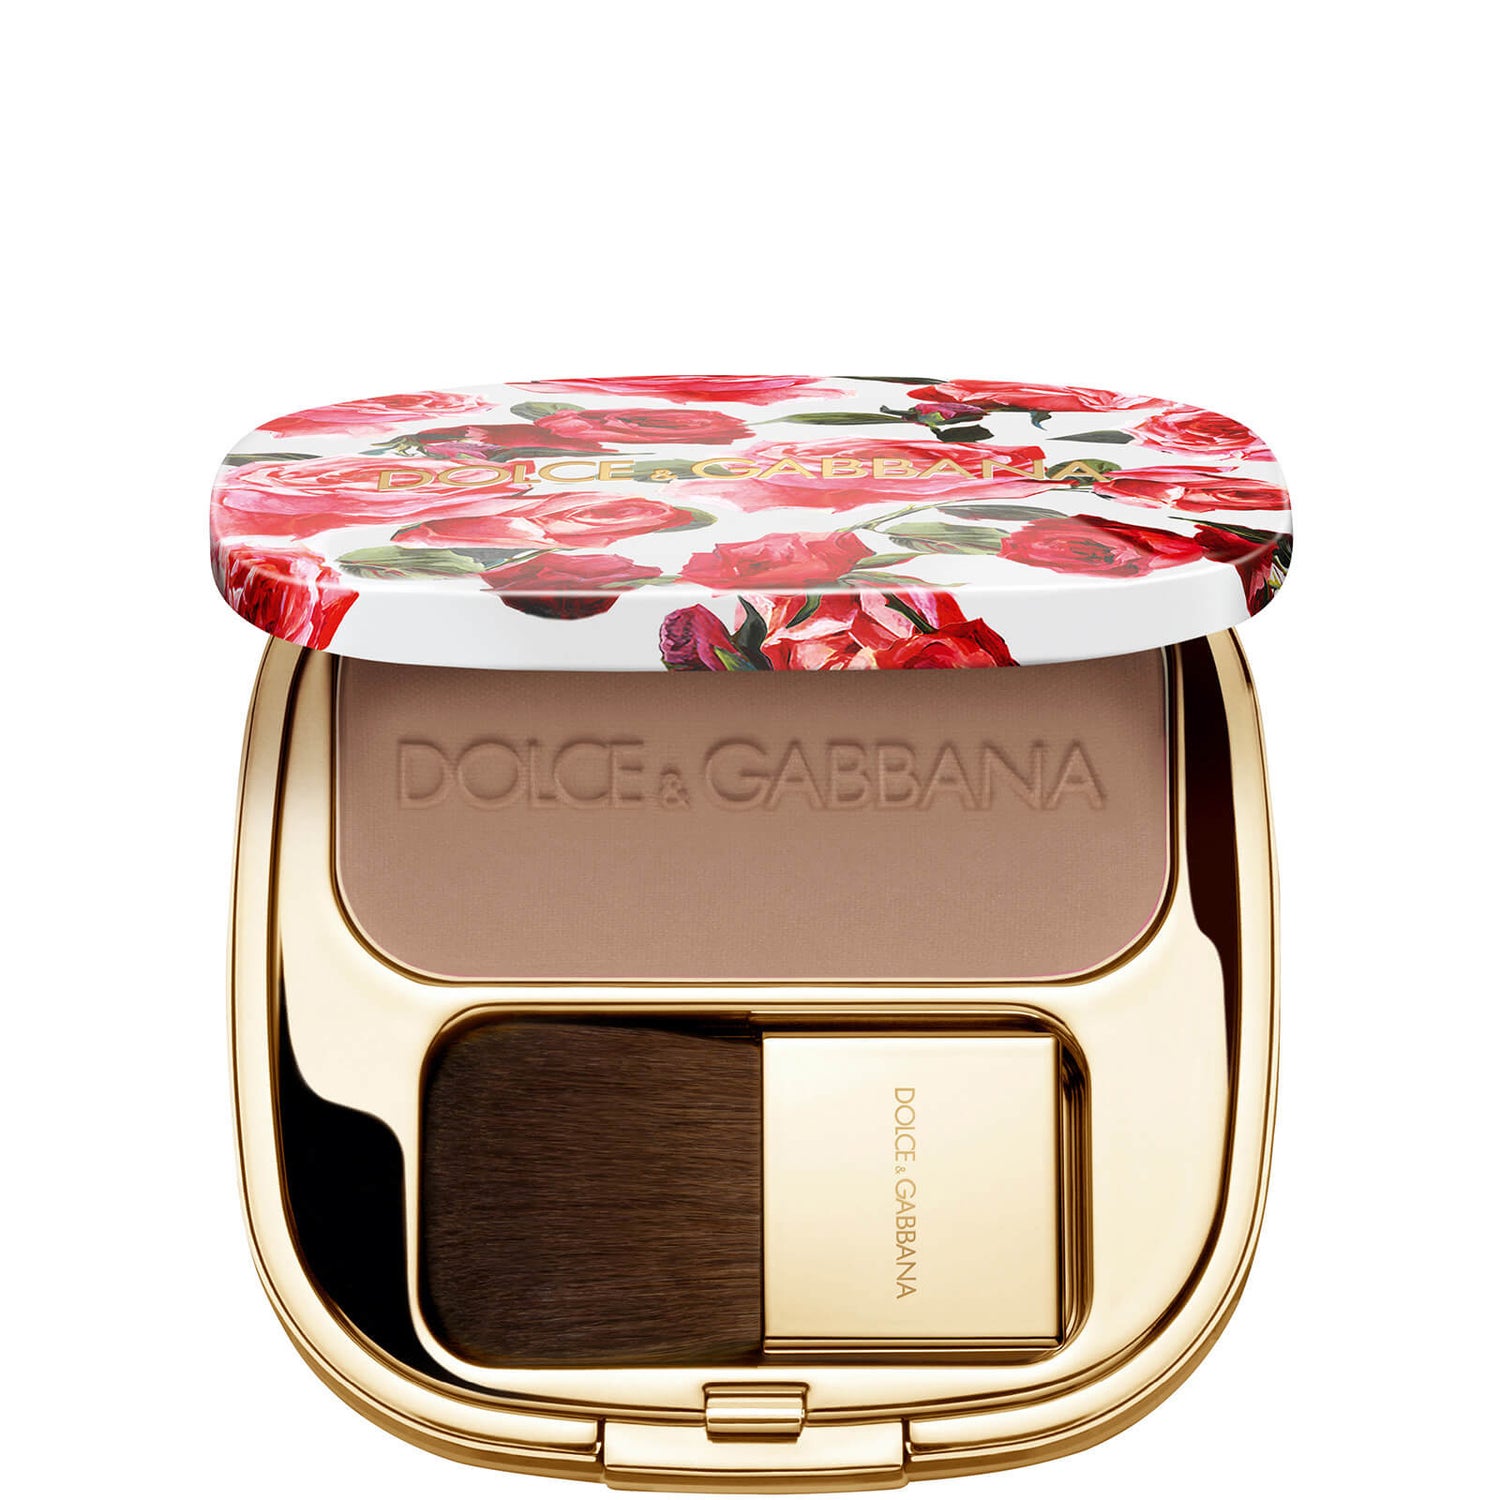 Dolce&Gabbana Blush of Roses Luminous Cheek Colour 5g (Various Shades)